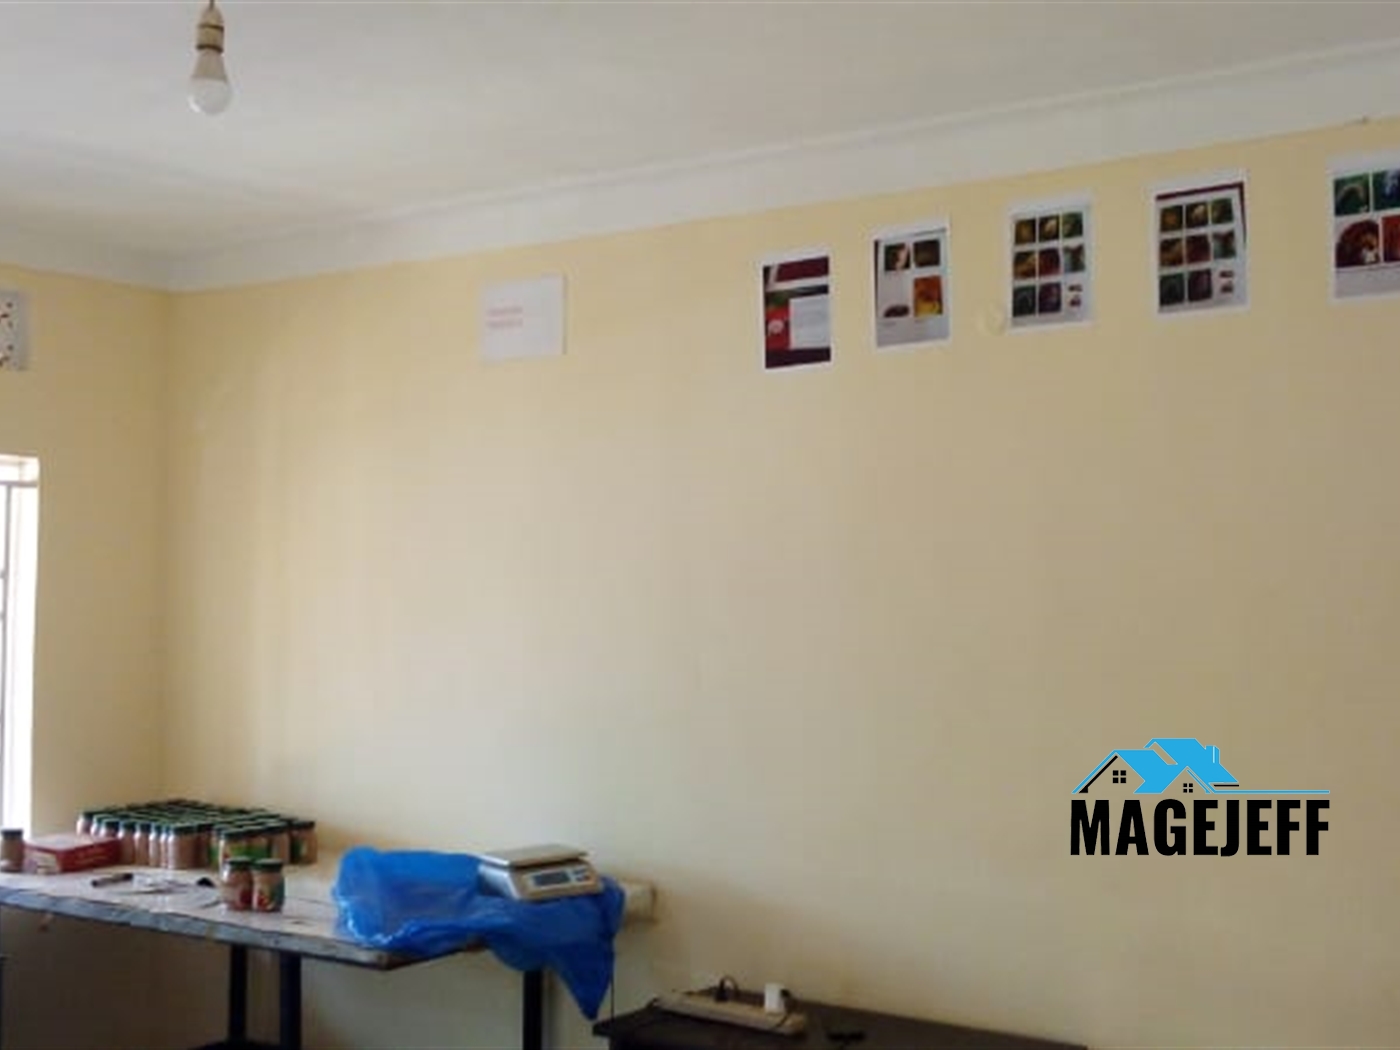 Bungalow for sale in Najjera Kampala